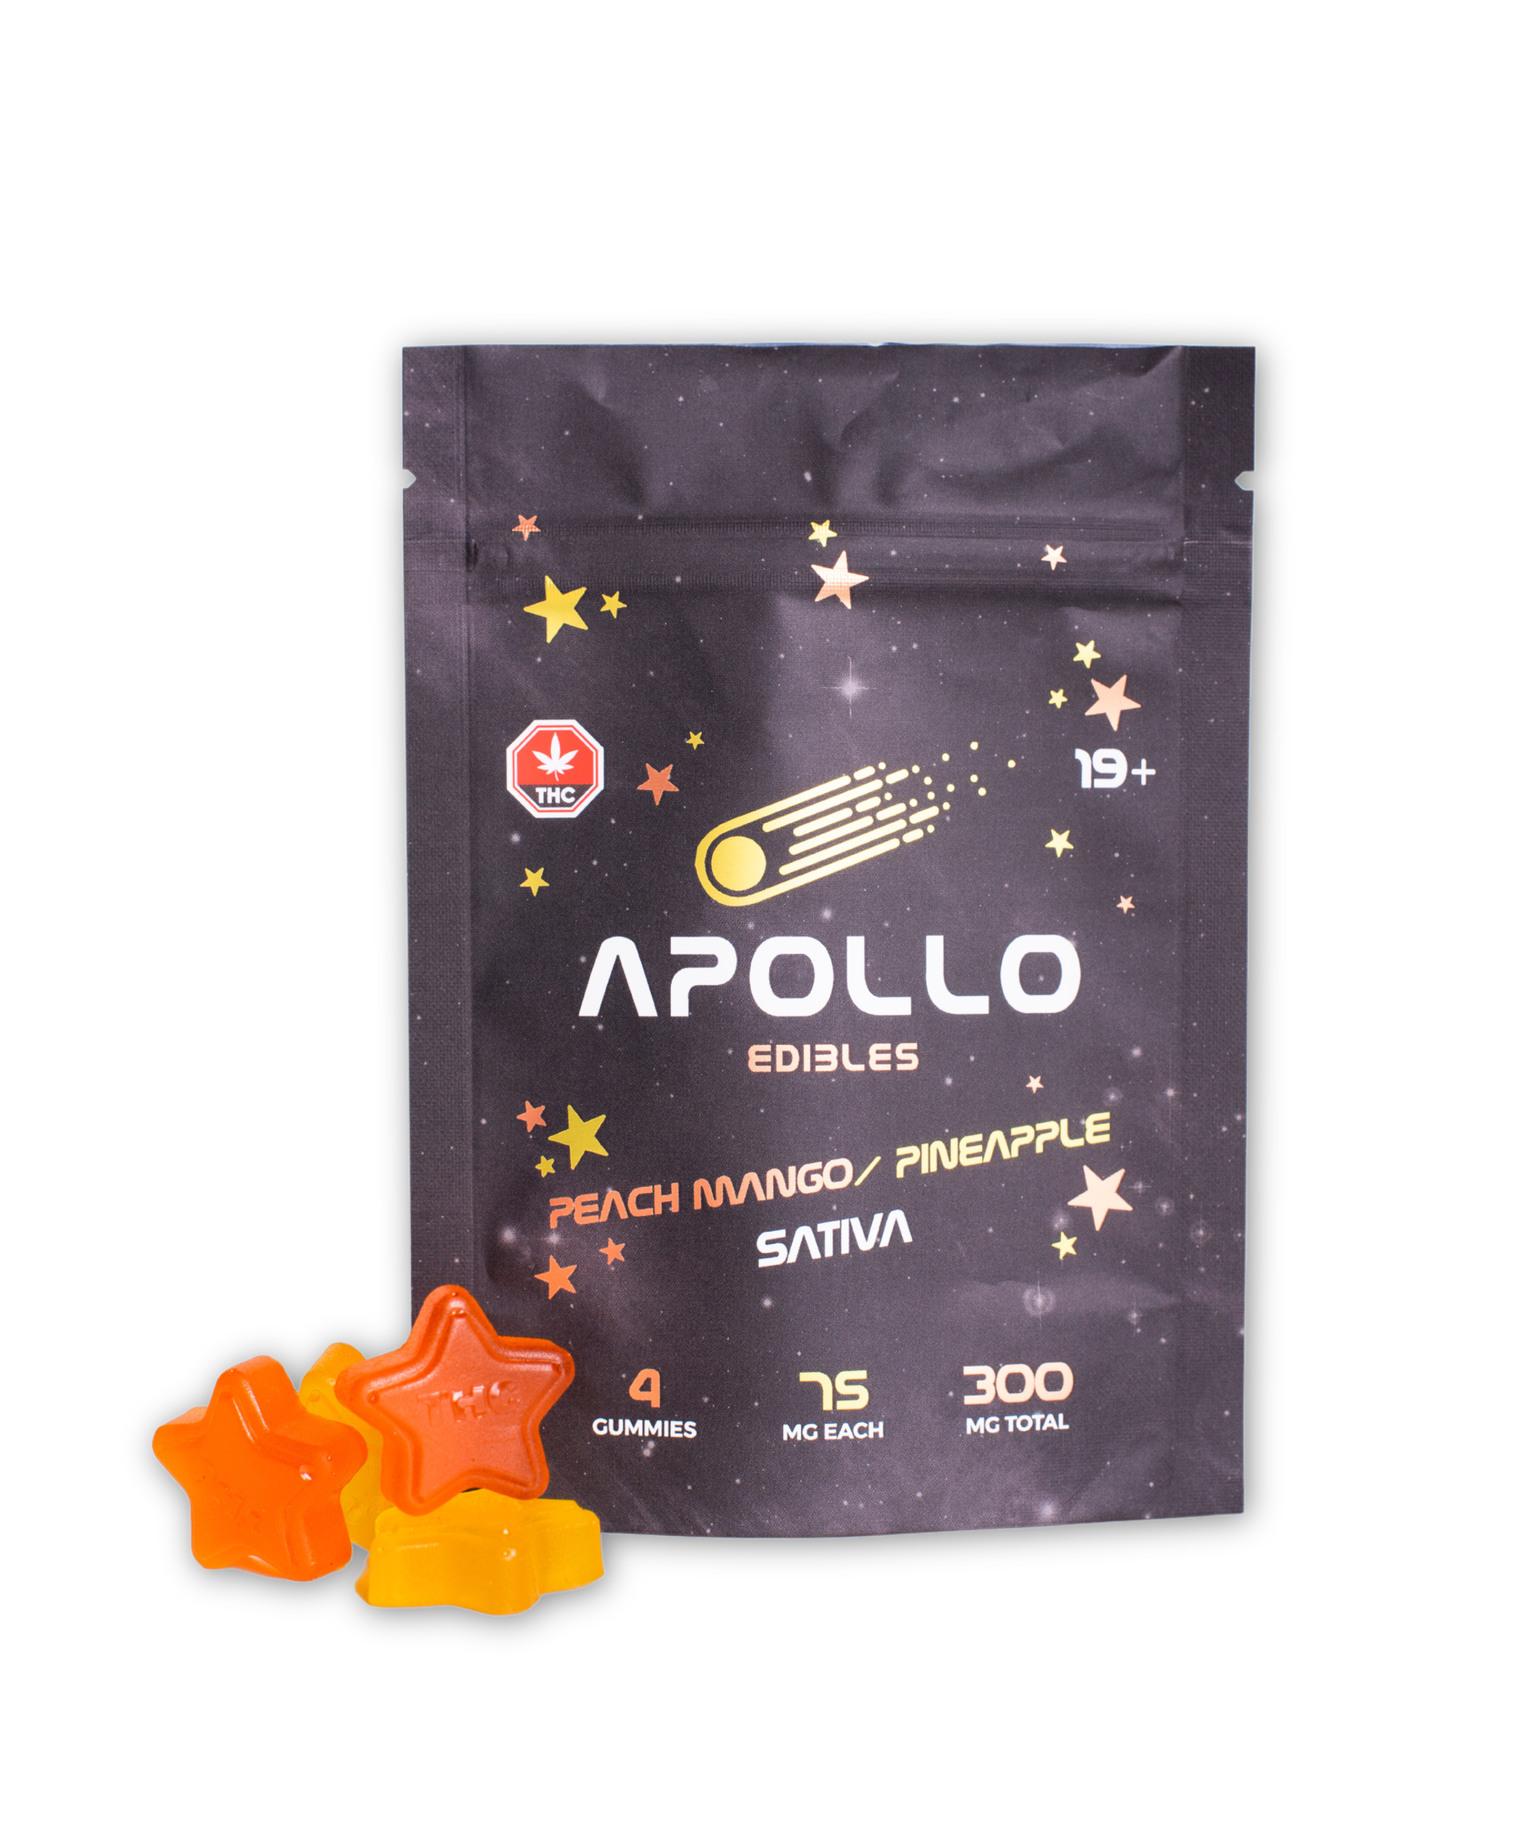 Buy Apollo Edibles - Peach Mango/Pineapple Shooting Stars 300mg THC Sativa at Wccannabis Online Shop